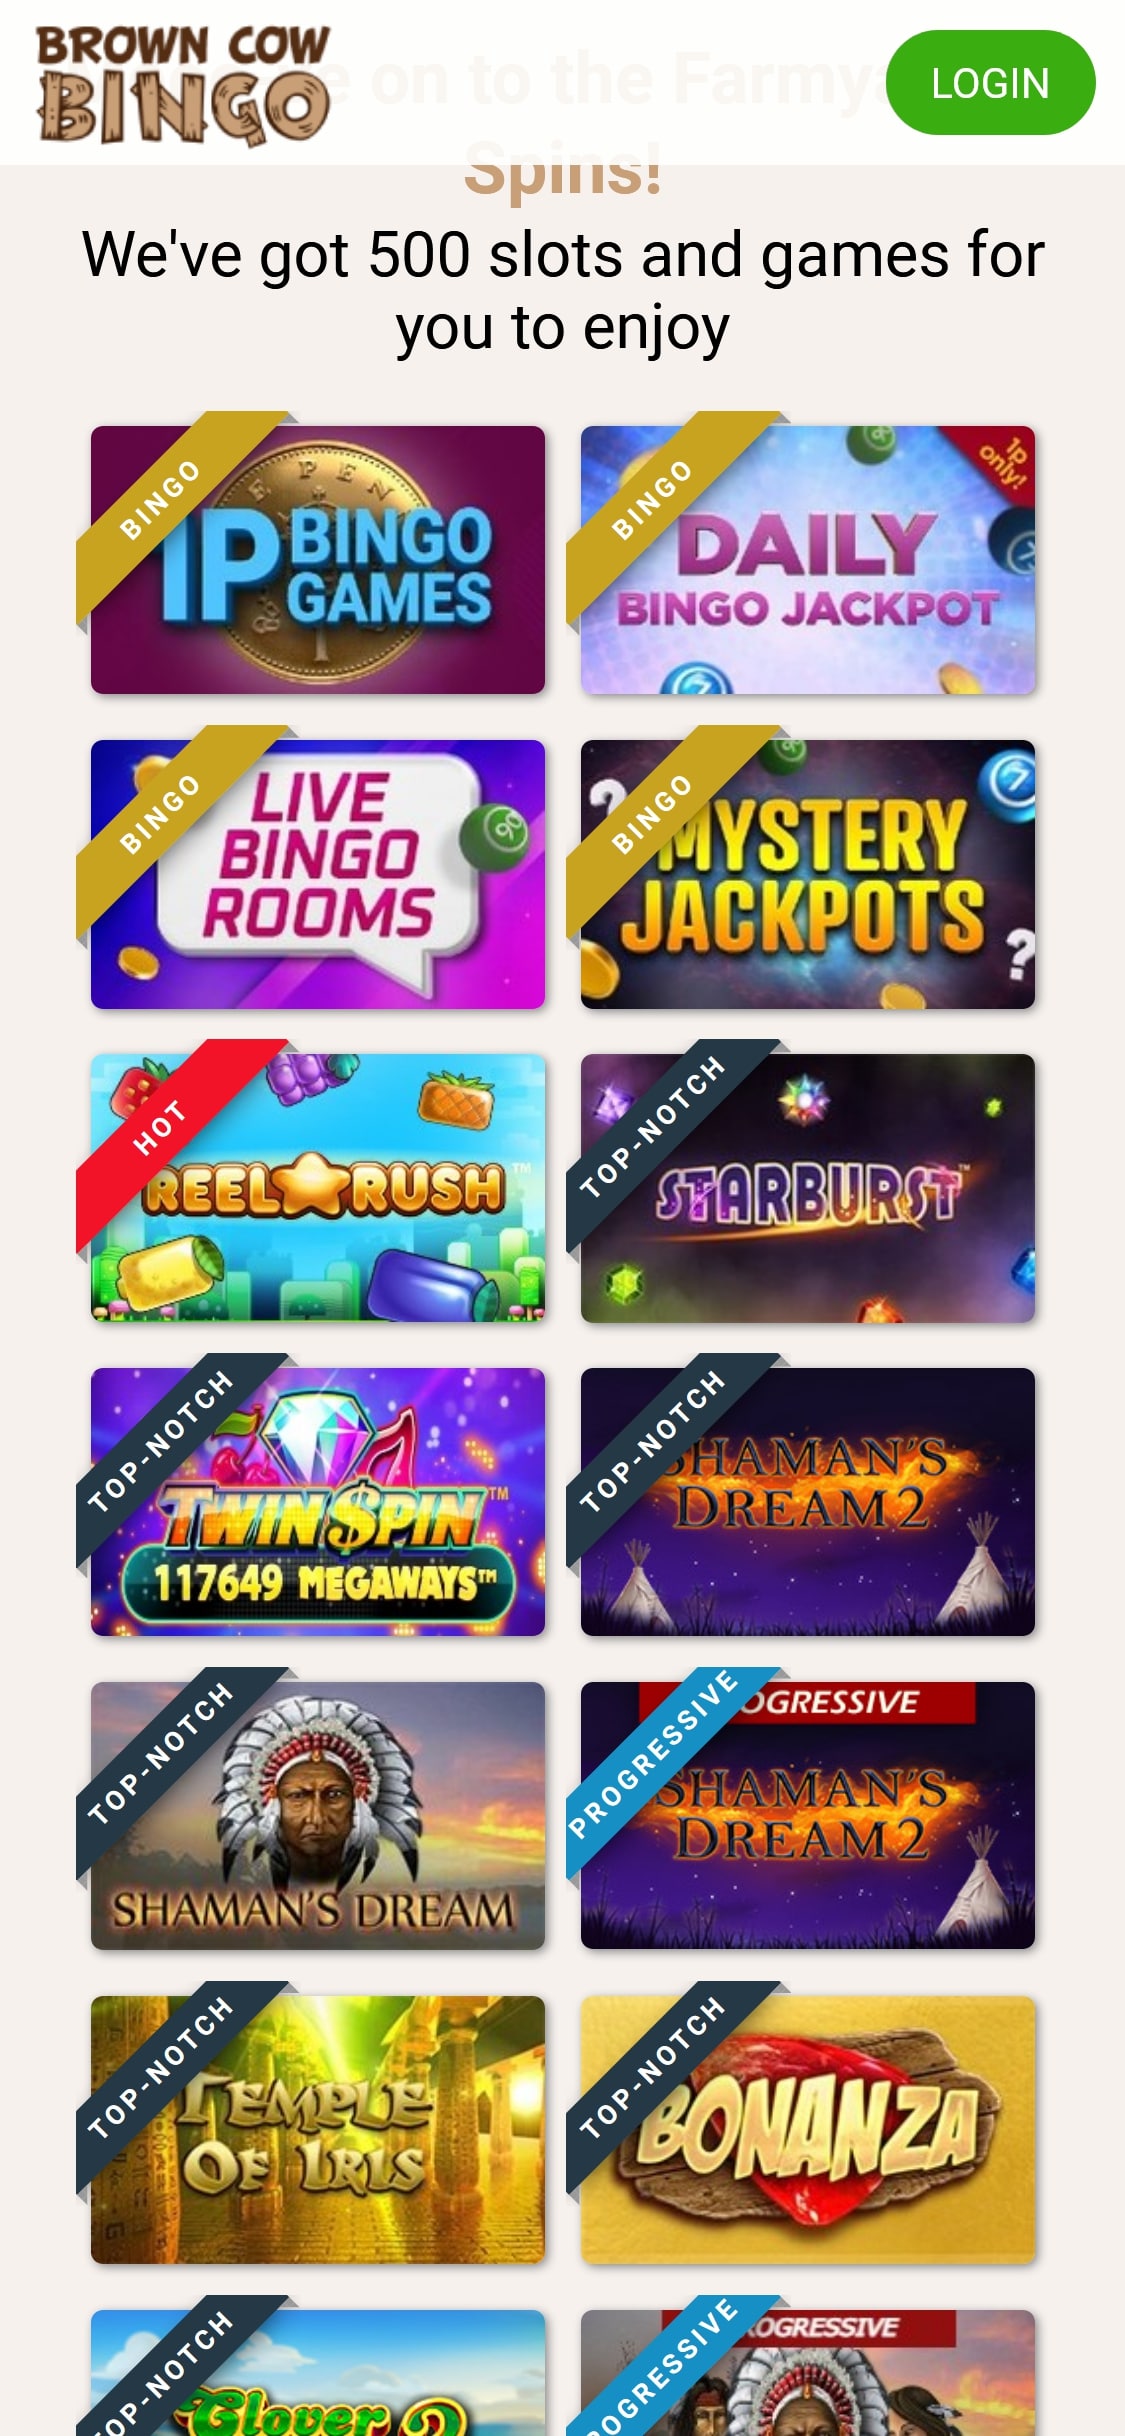 Brown Cow Bingo Casino Mobile Games Review